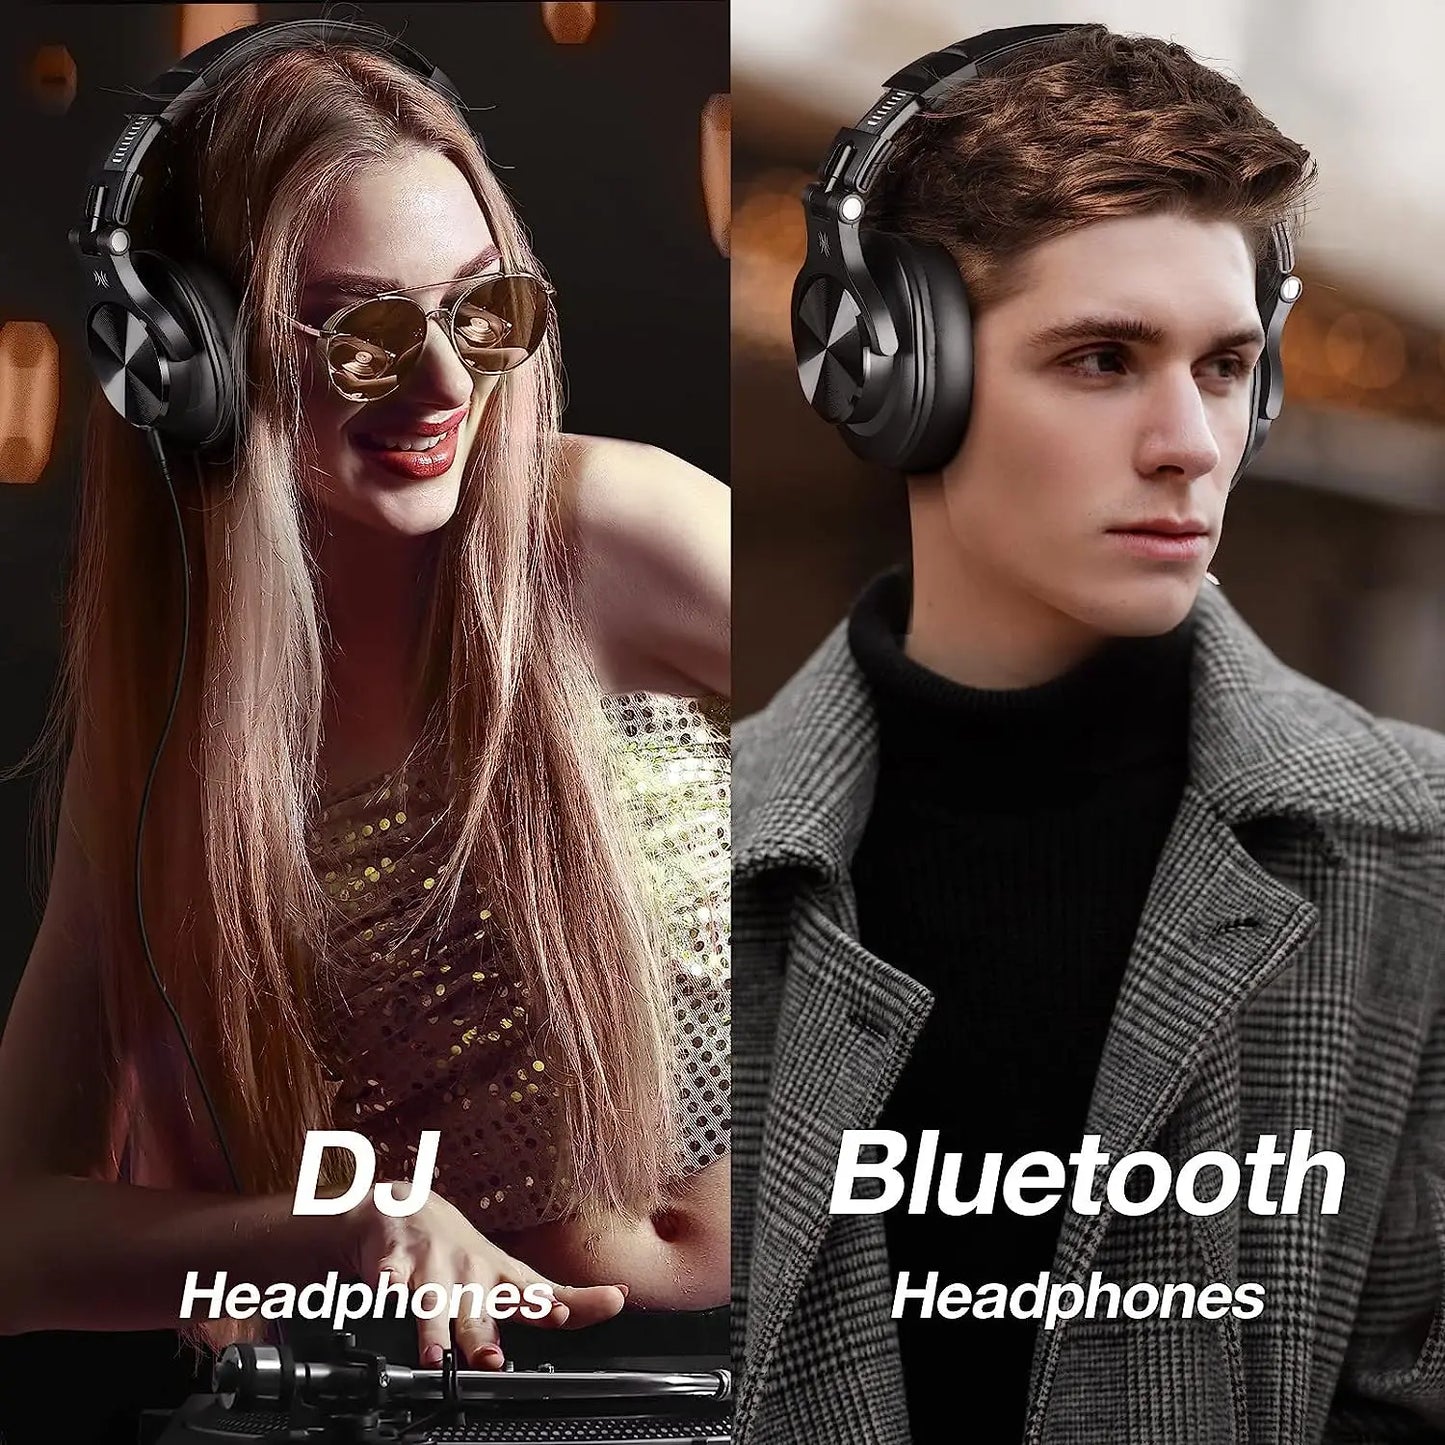 SoundPro 5.2: Bluetooth Hi-Res Audio Headphones